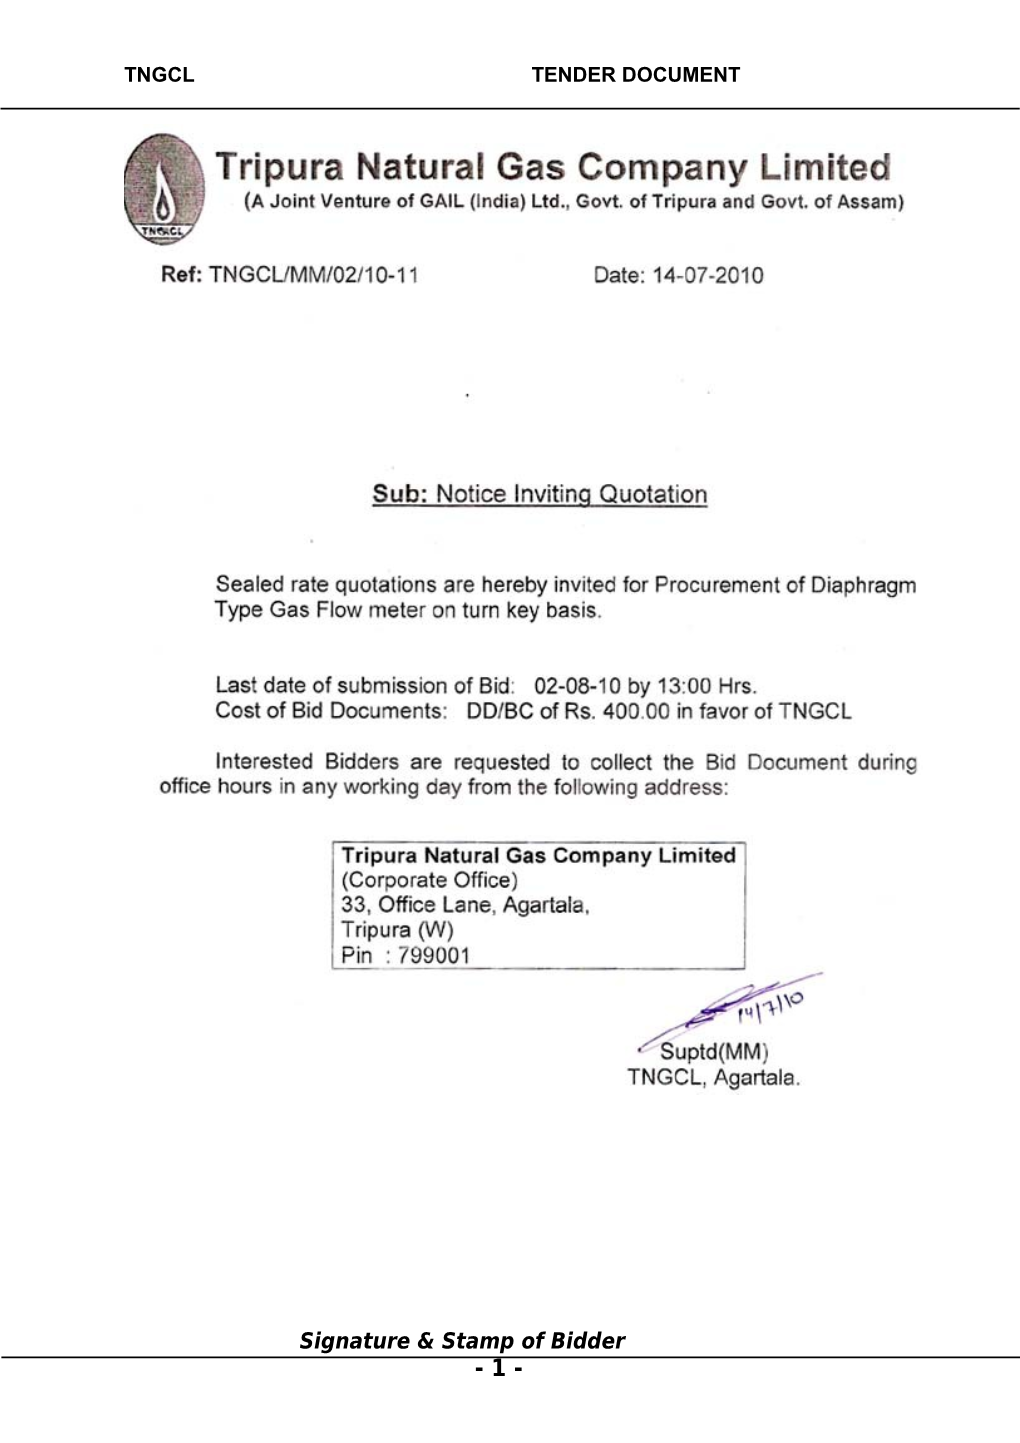 Tripura Natural Gas Company Ltd